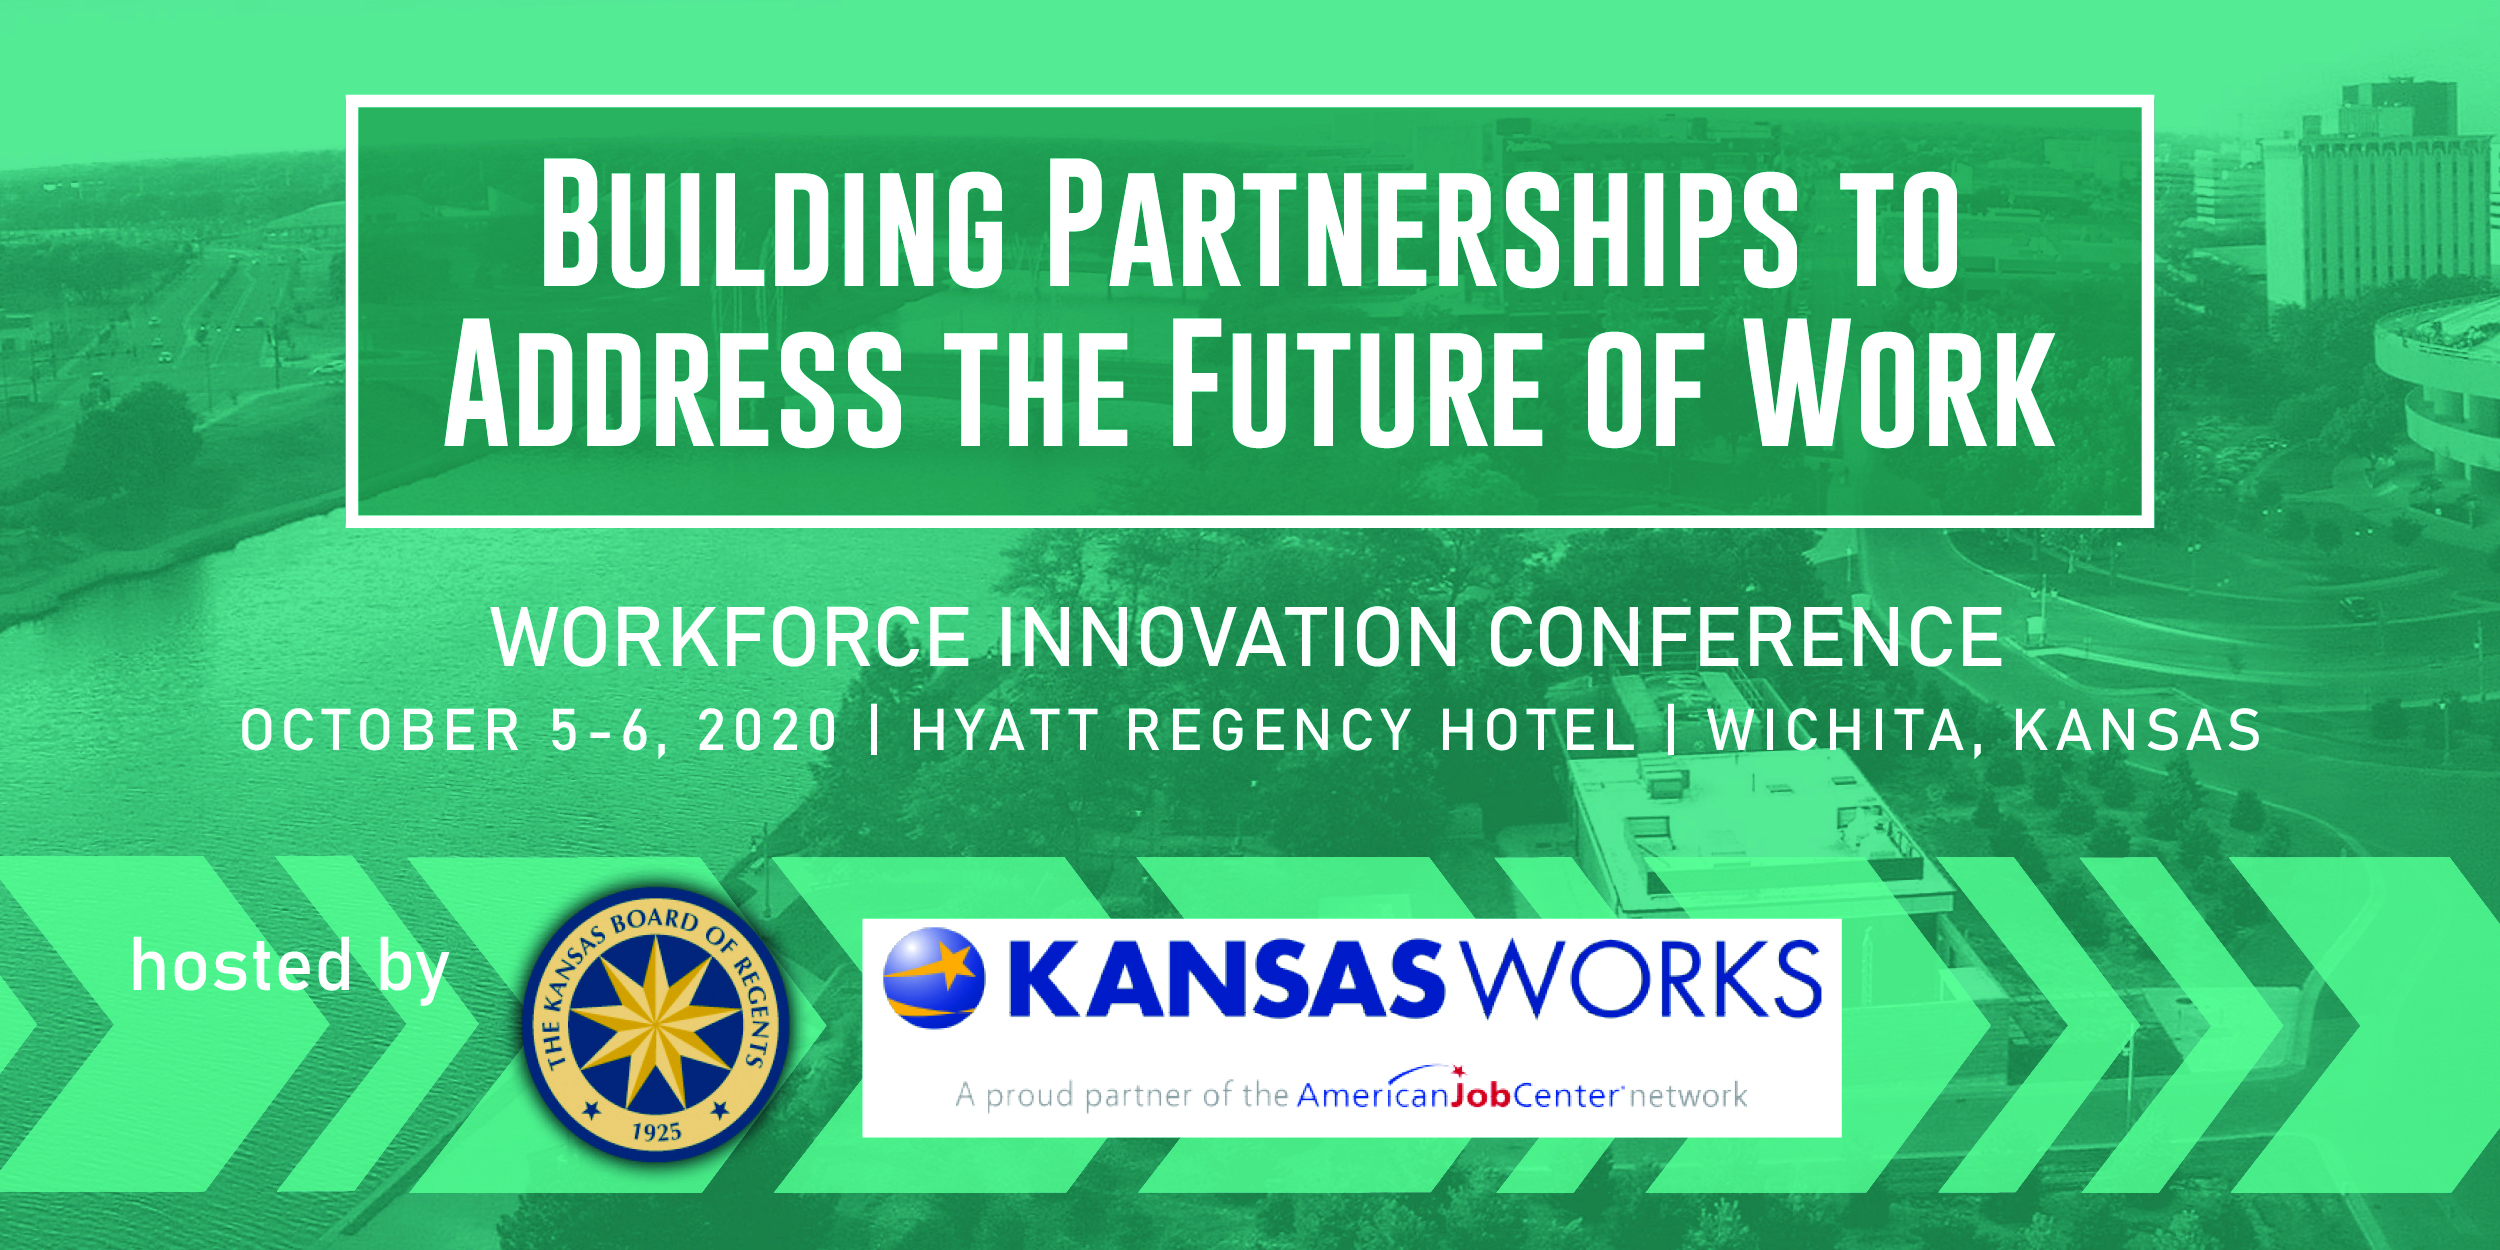 Workforce Innovation Conference